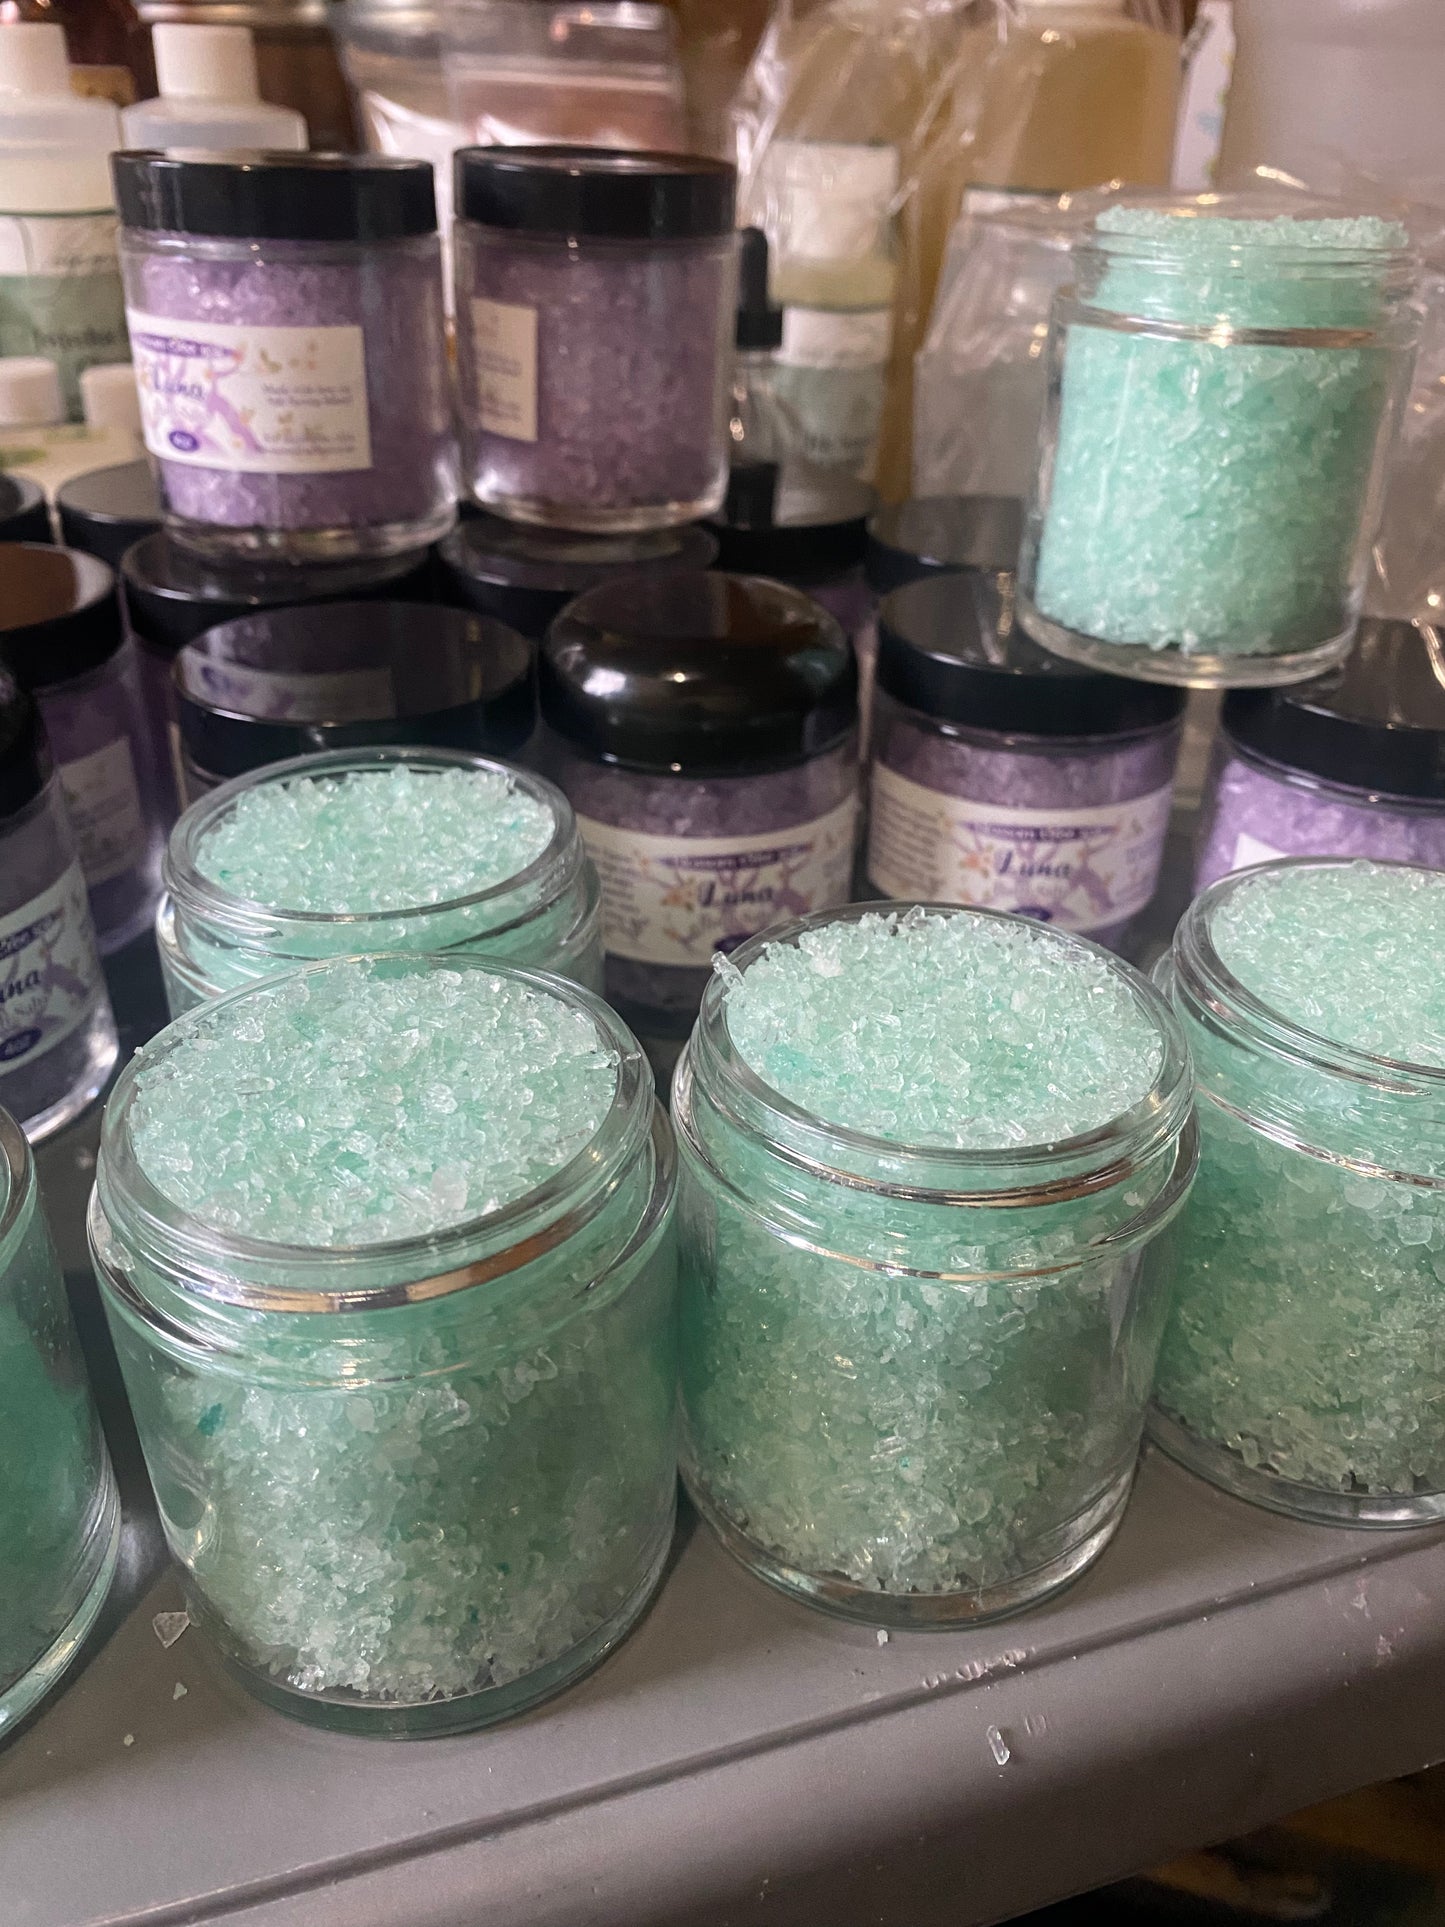 Emerald sea bath salts